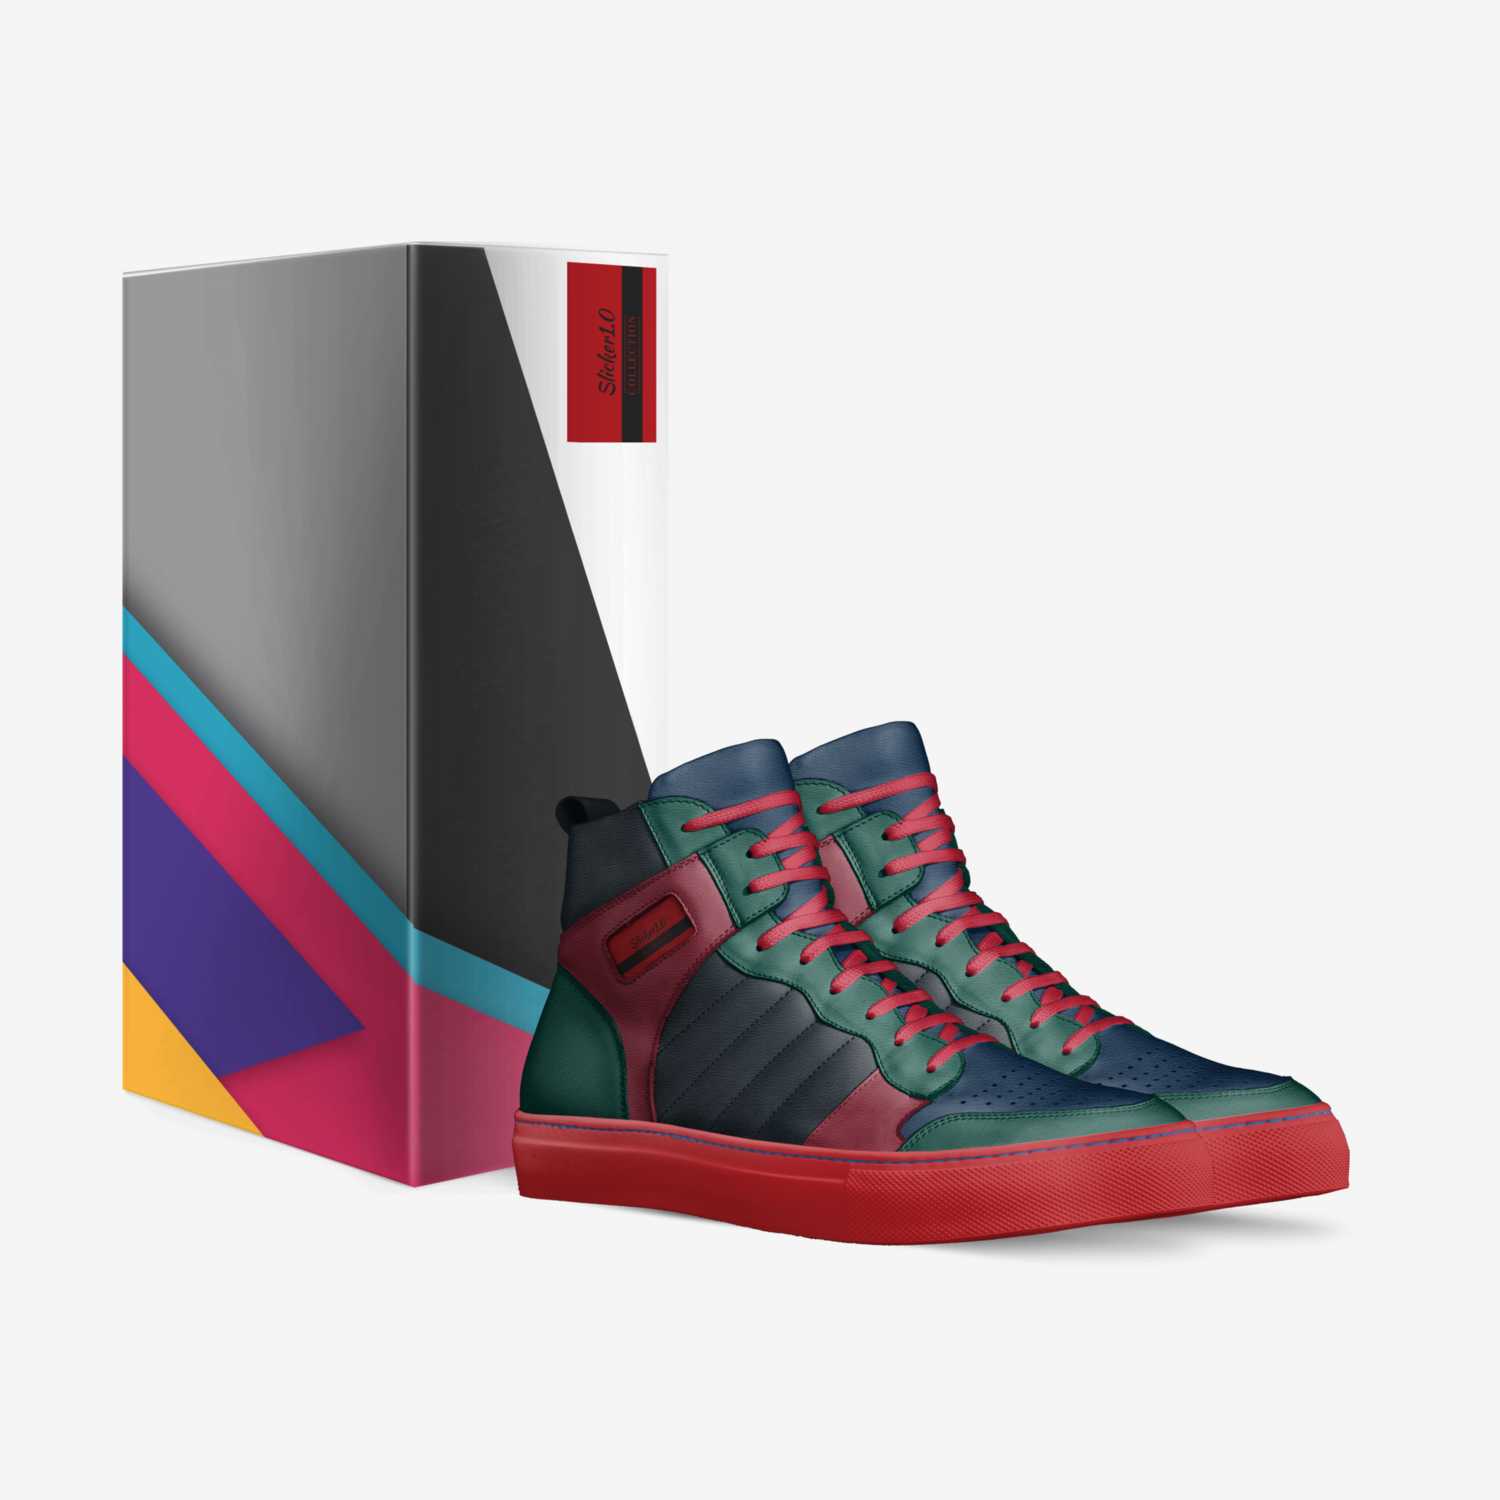 Slicker1.0 custom made in Italy shoes by Josh Barnard | Box view